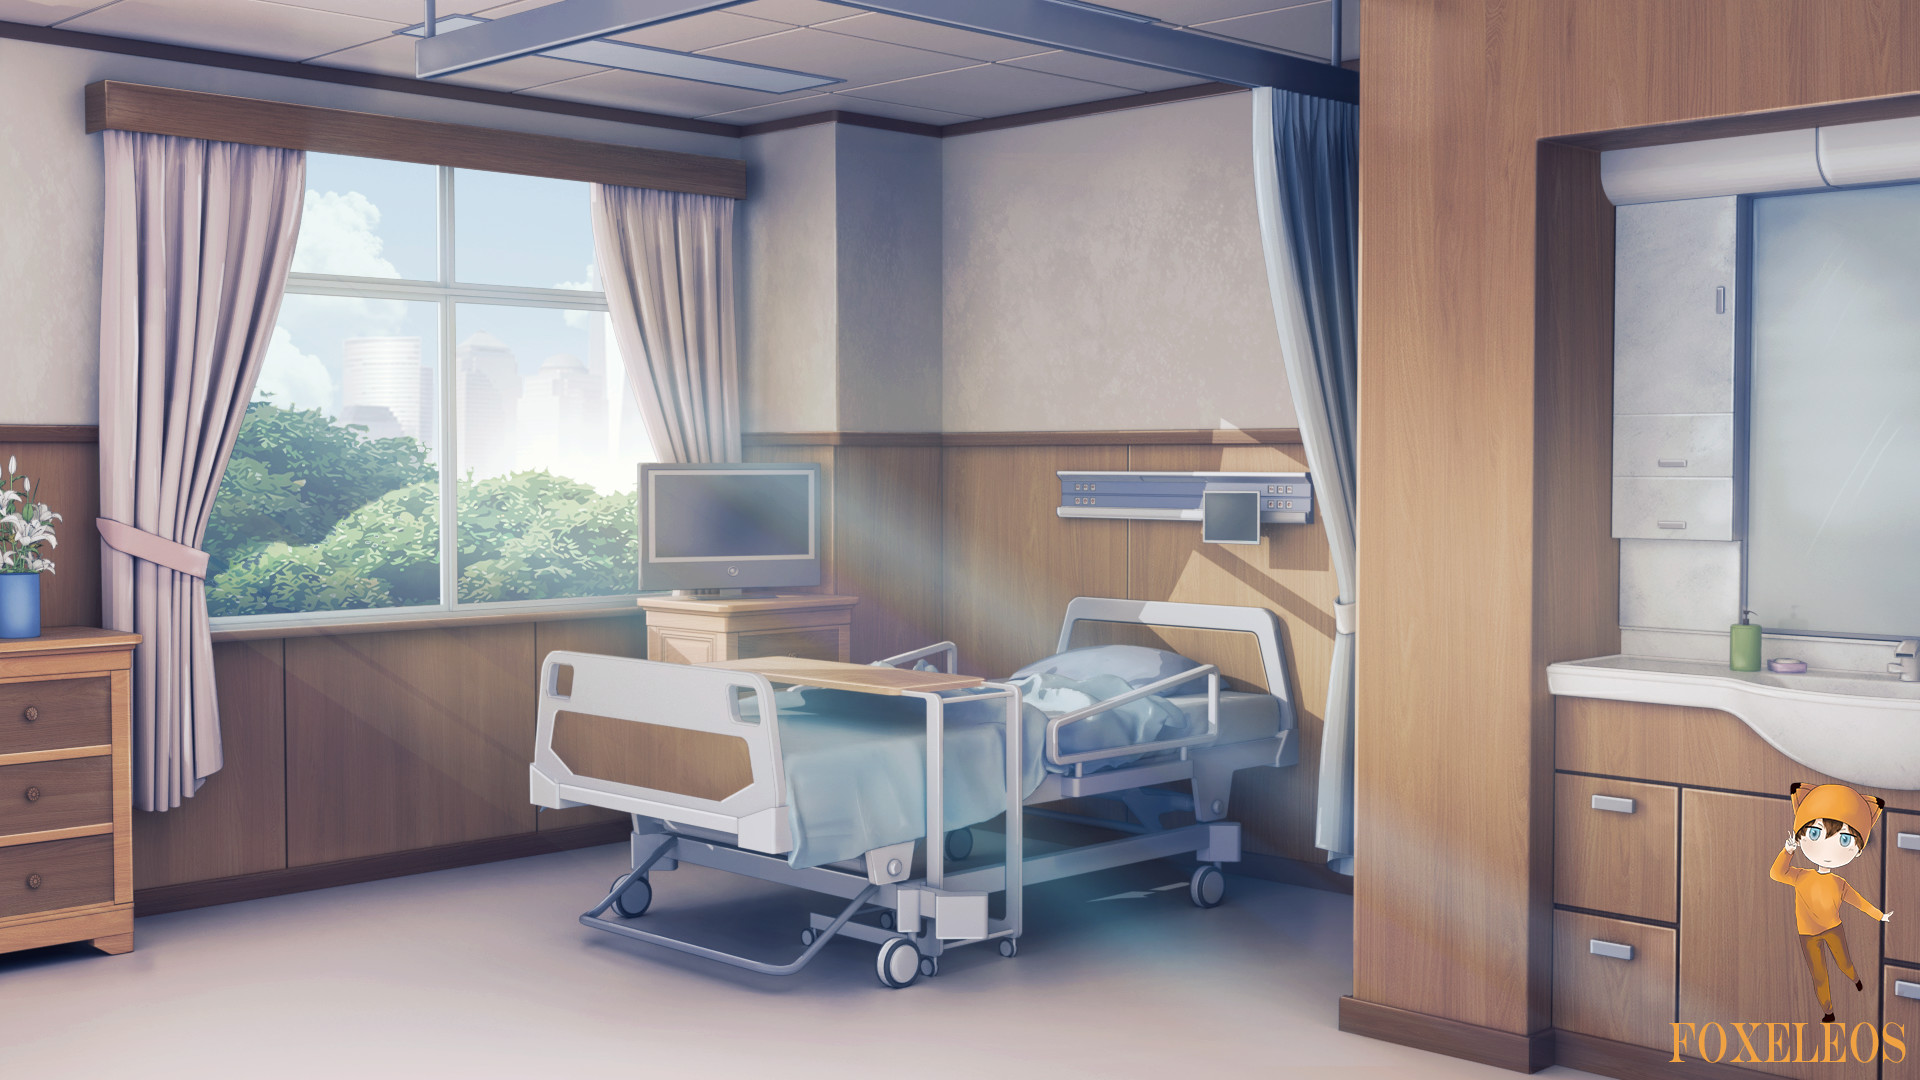 hospital background images